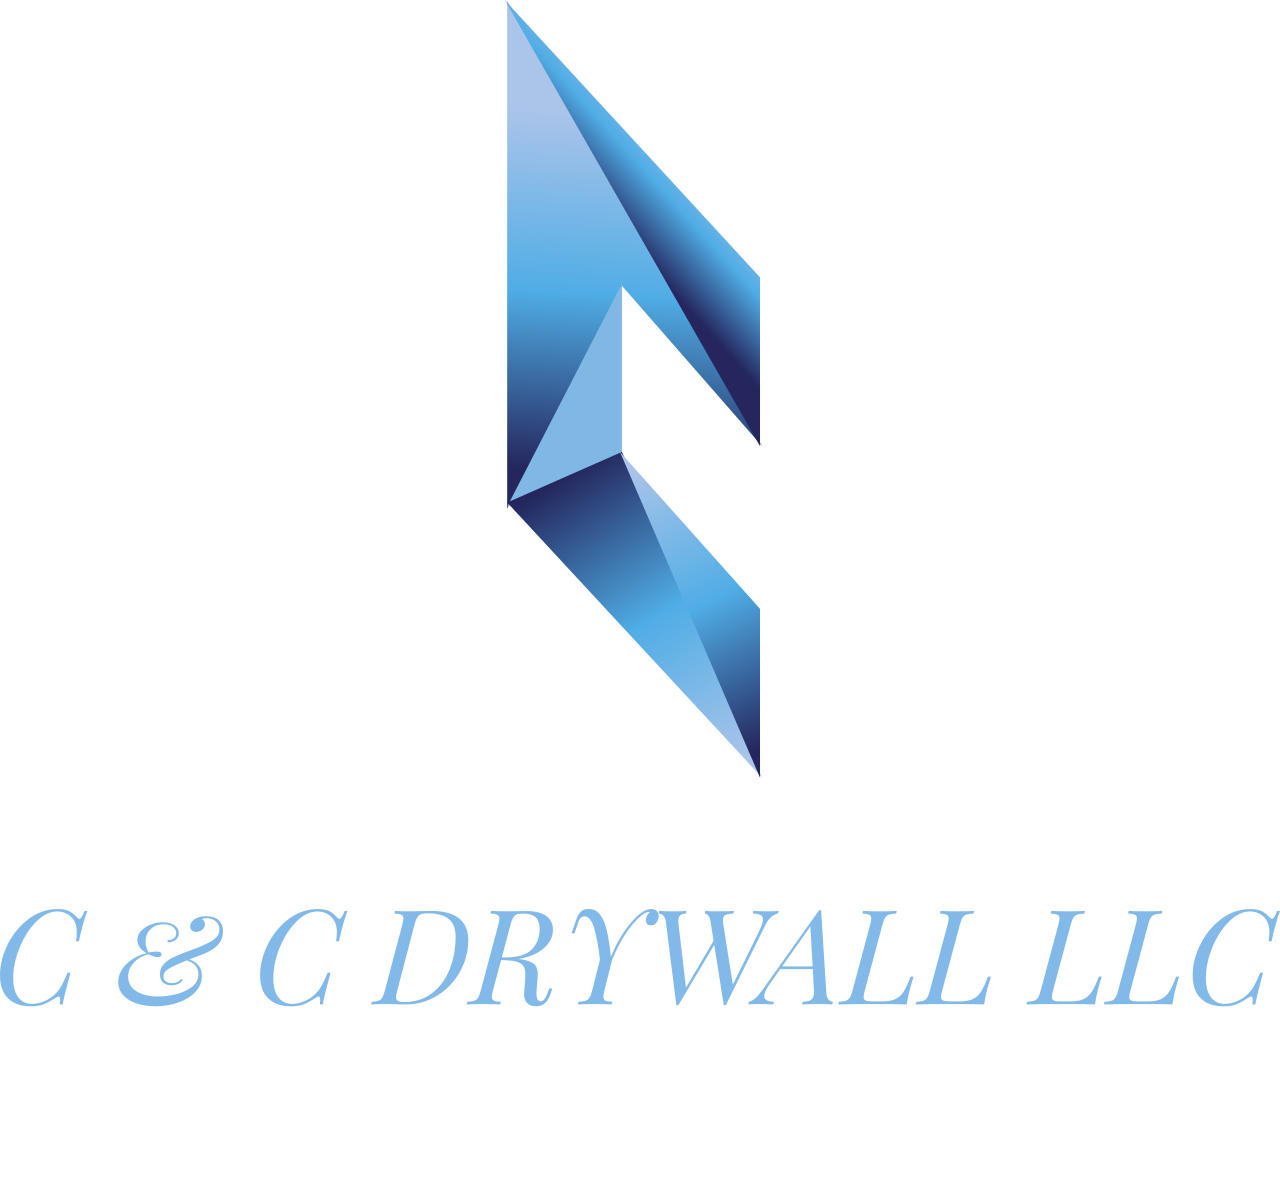 C & C DRYWALL LLC's logo